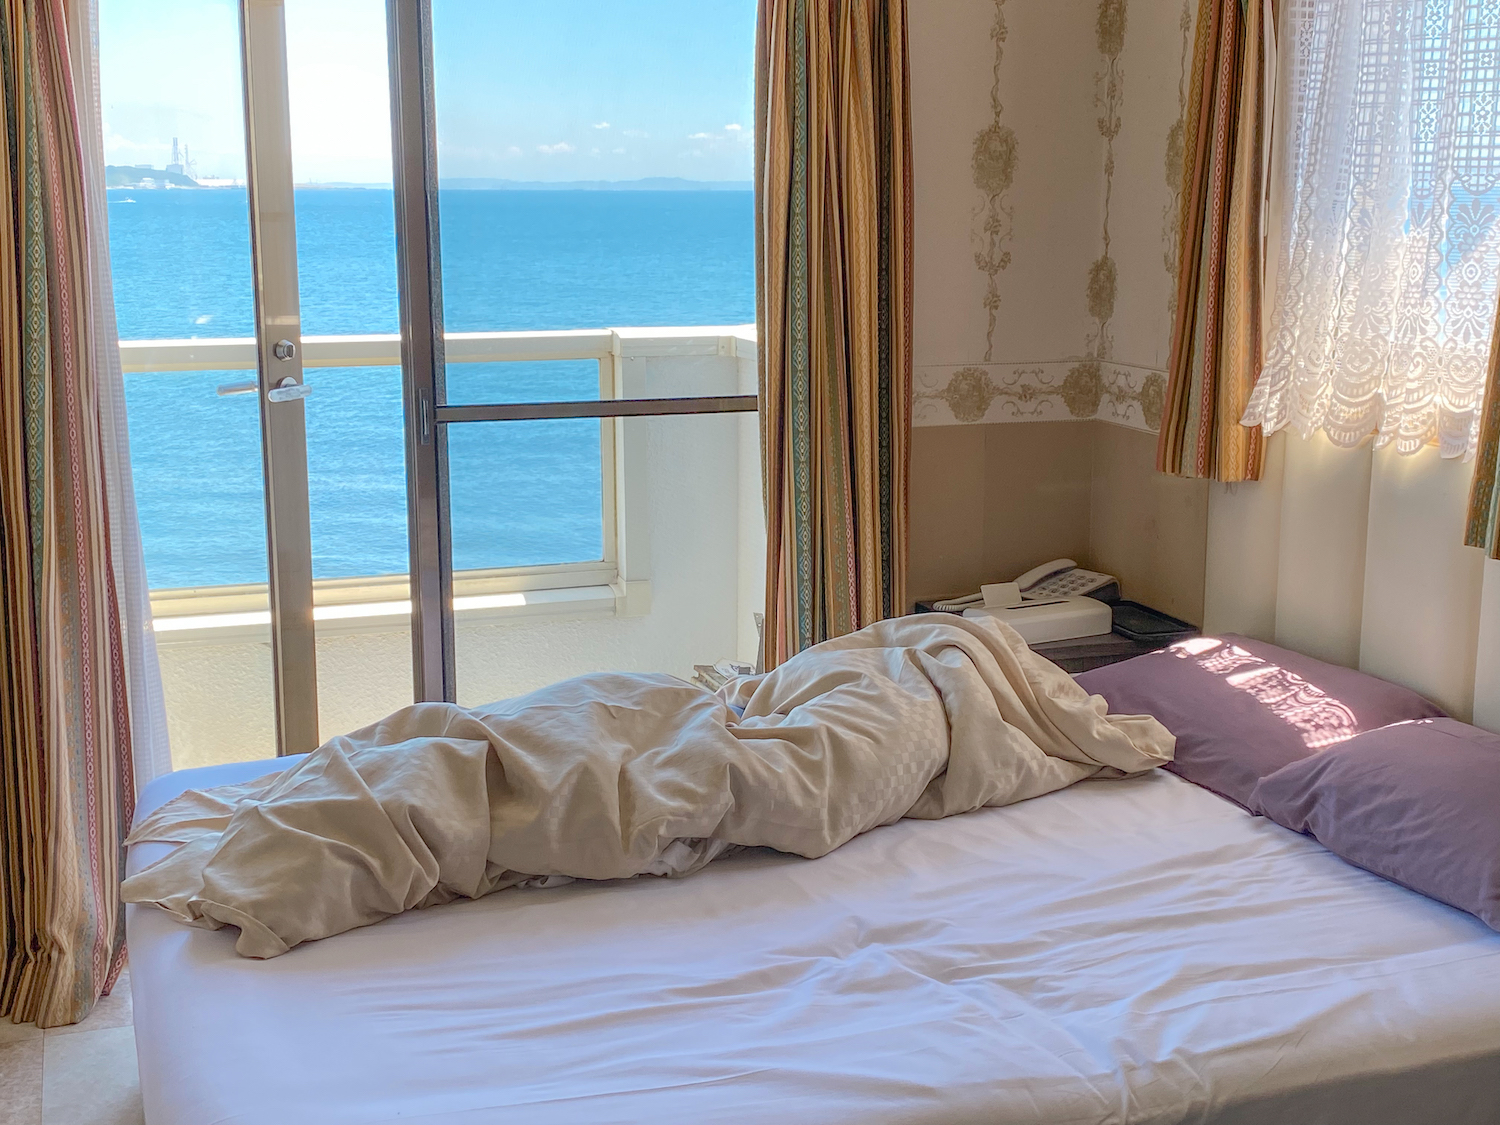 HOTEL SURF SIDE（ホテルサーフサイド）の301号室のベッド。海が見えて、日差しが入り、最高のリラックス空間だ。2022年7月23日。撮影：SHUN ROCKETDIVE